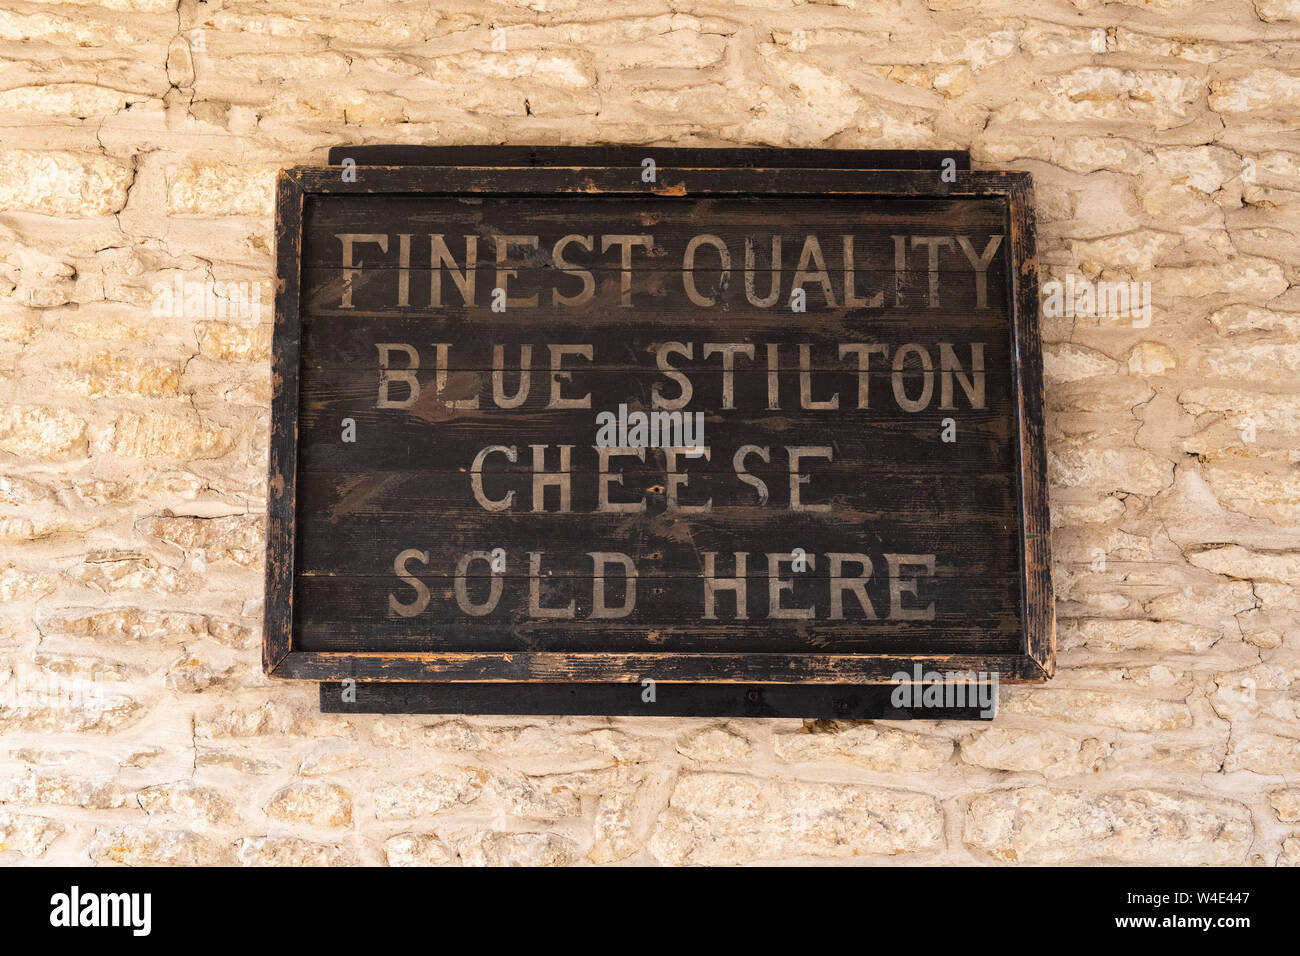 The Bell Inn Hotel, Stilton, Peterborough, England, UK - finest quality blue stilton cheese sold here sign Stock Photo